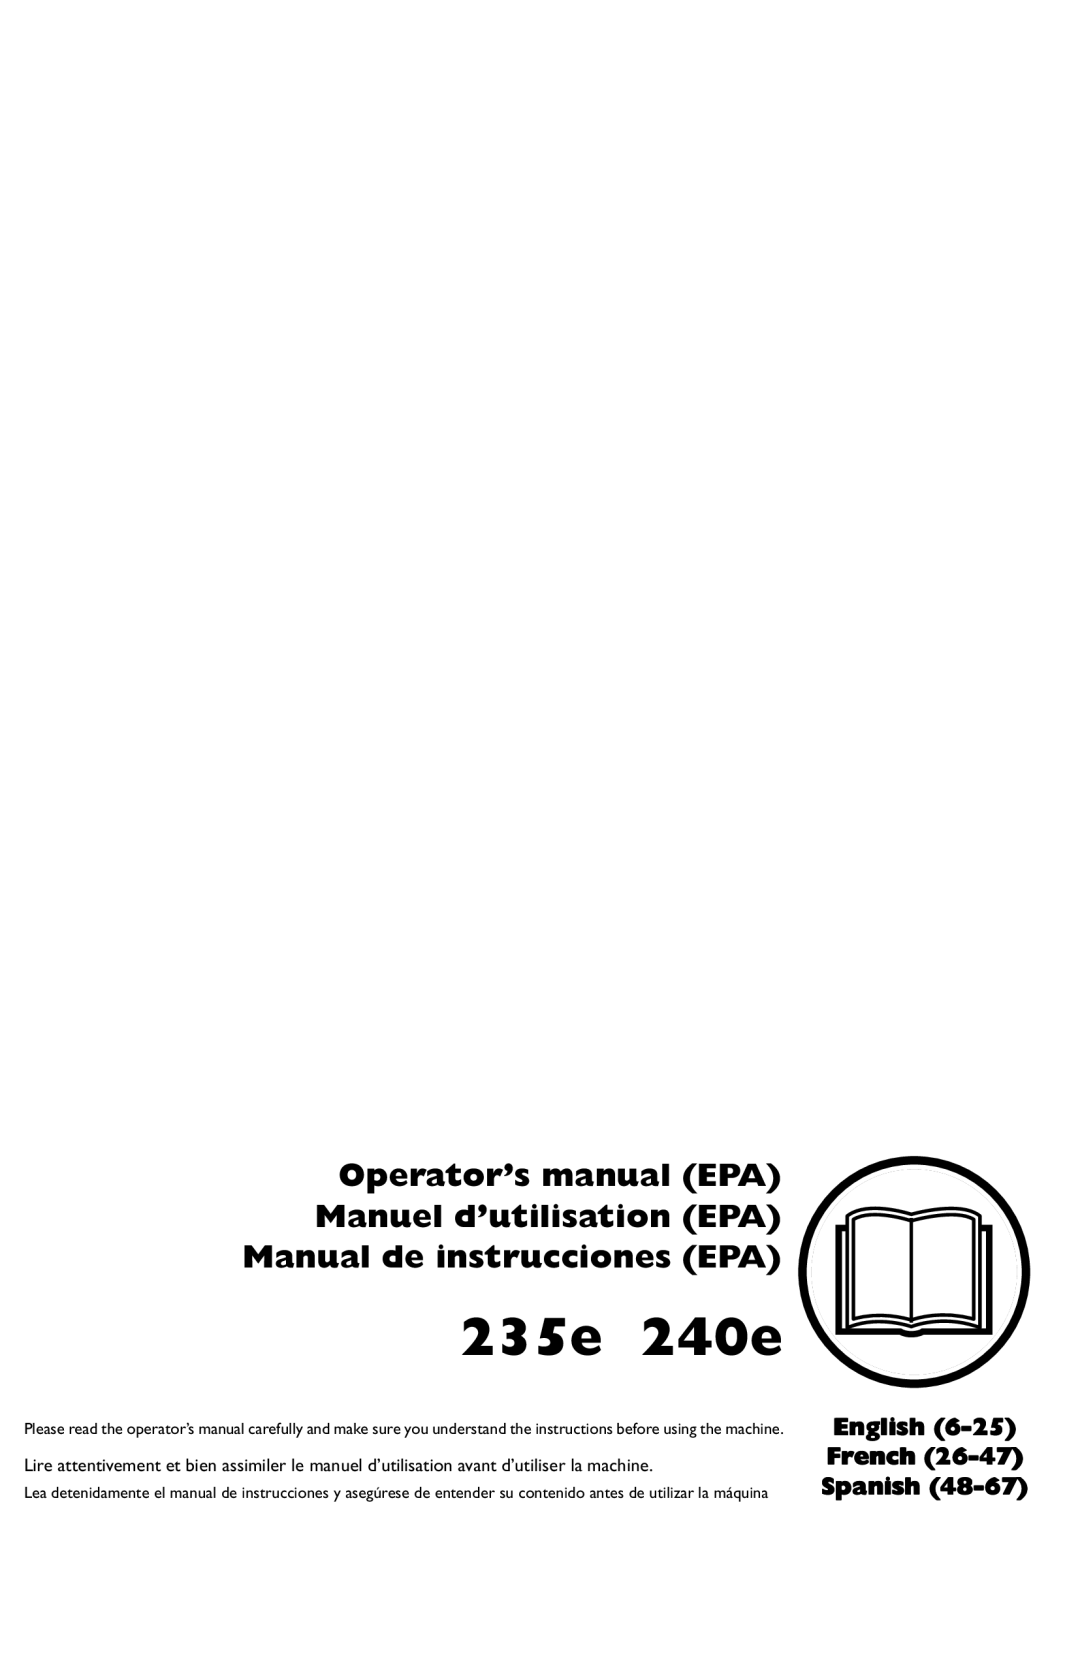 Husqvarna manuel dutilisation 235e 240e, Operator’s manual EPA, E nglish 